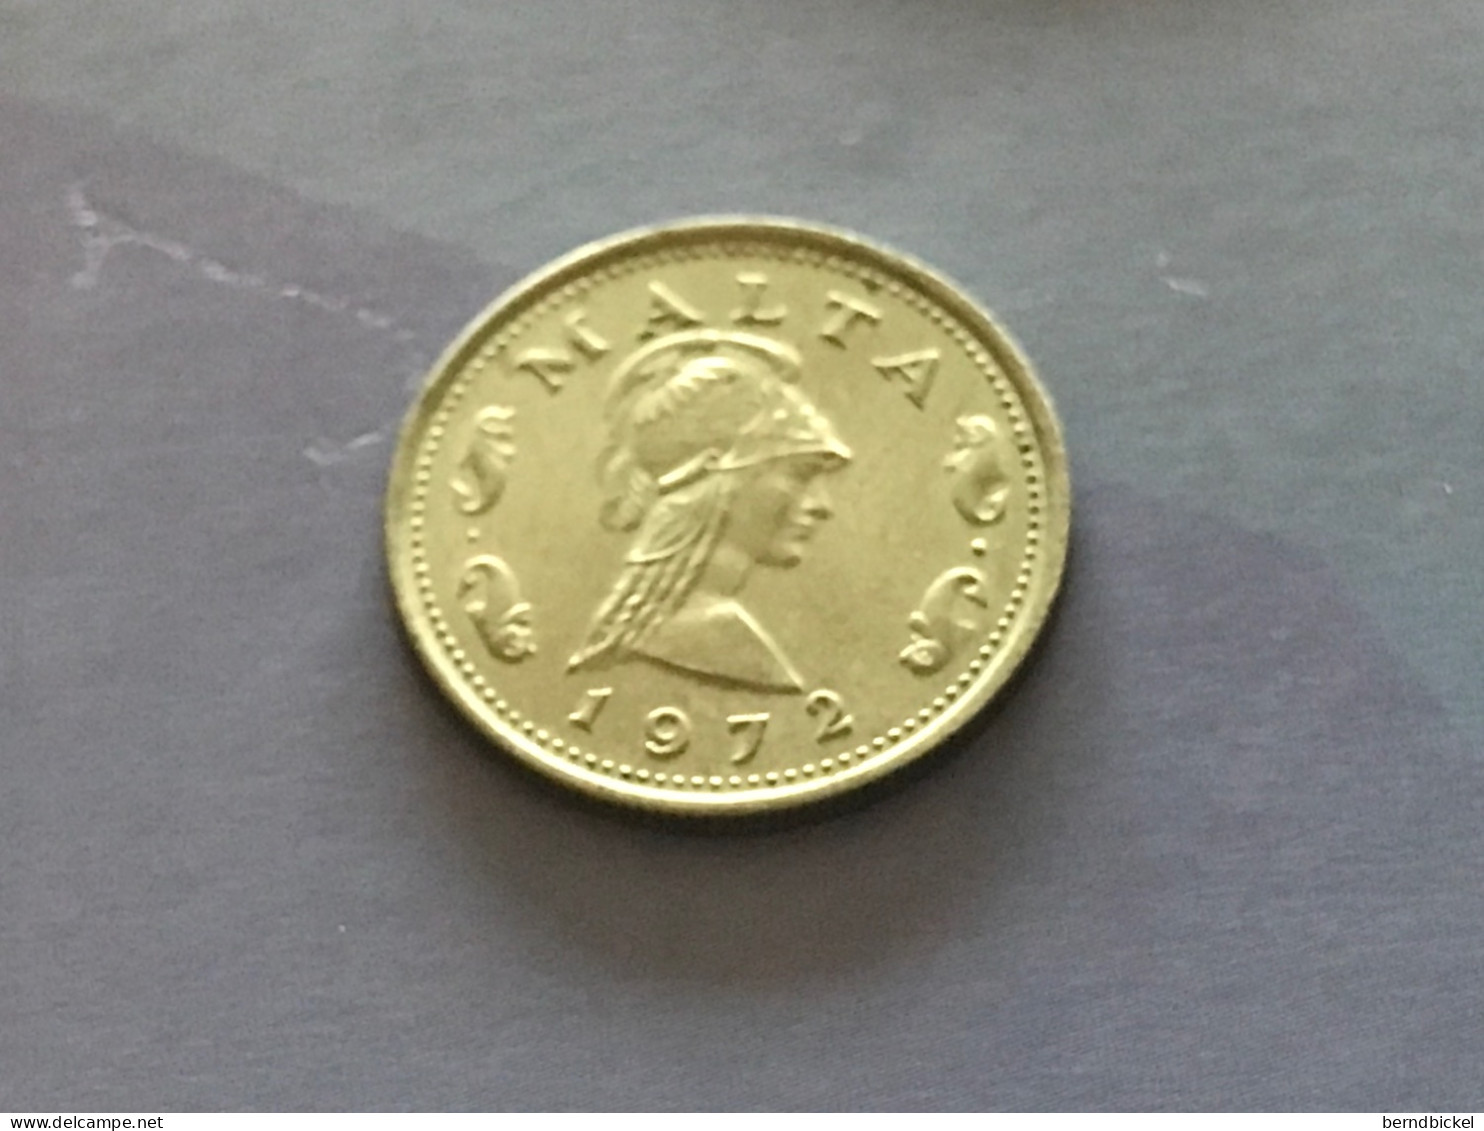 Münze Münzen Umlaufmünze Malta 2 Cent 1972 - Malta